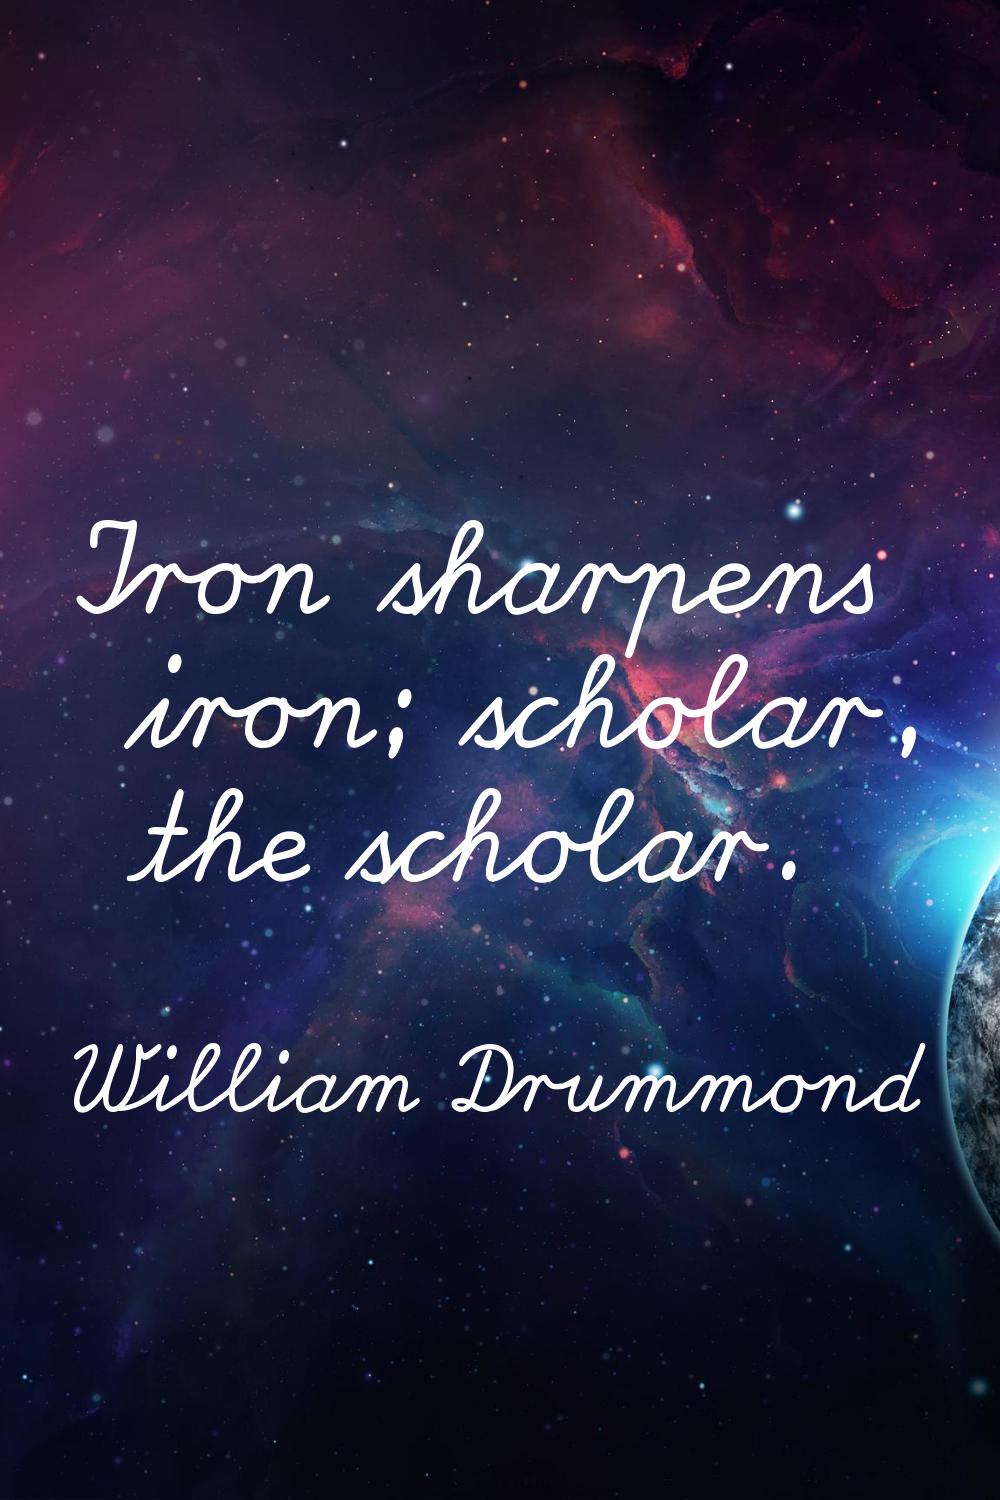 Iron sharpens iron; scholar, the scholar.